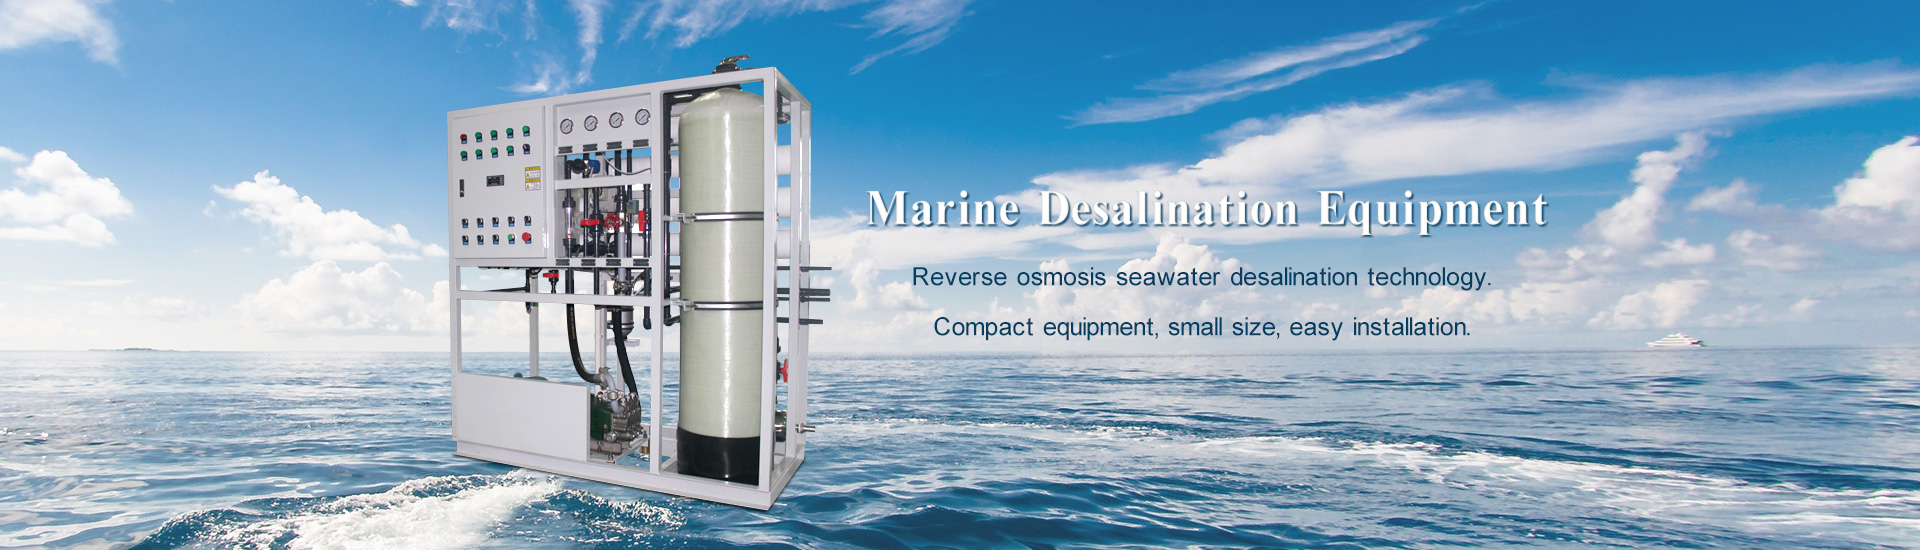 Marine Desalination Equipment